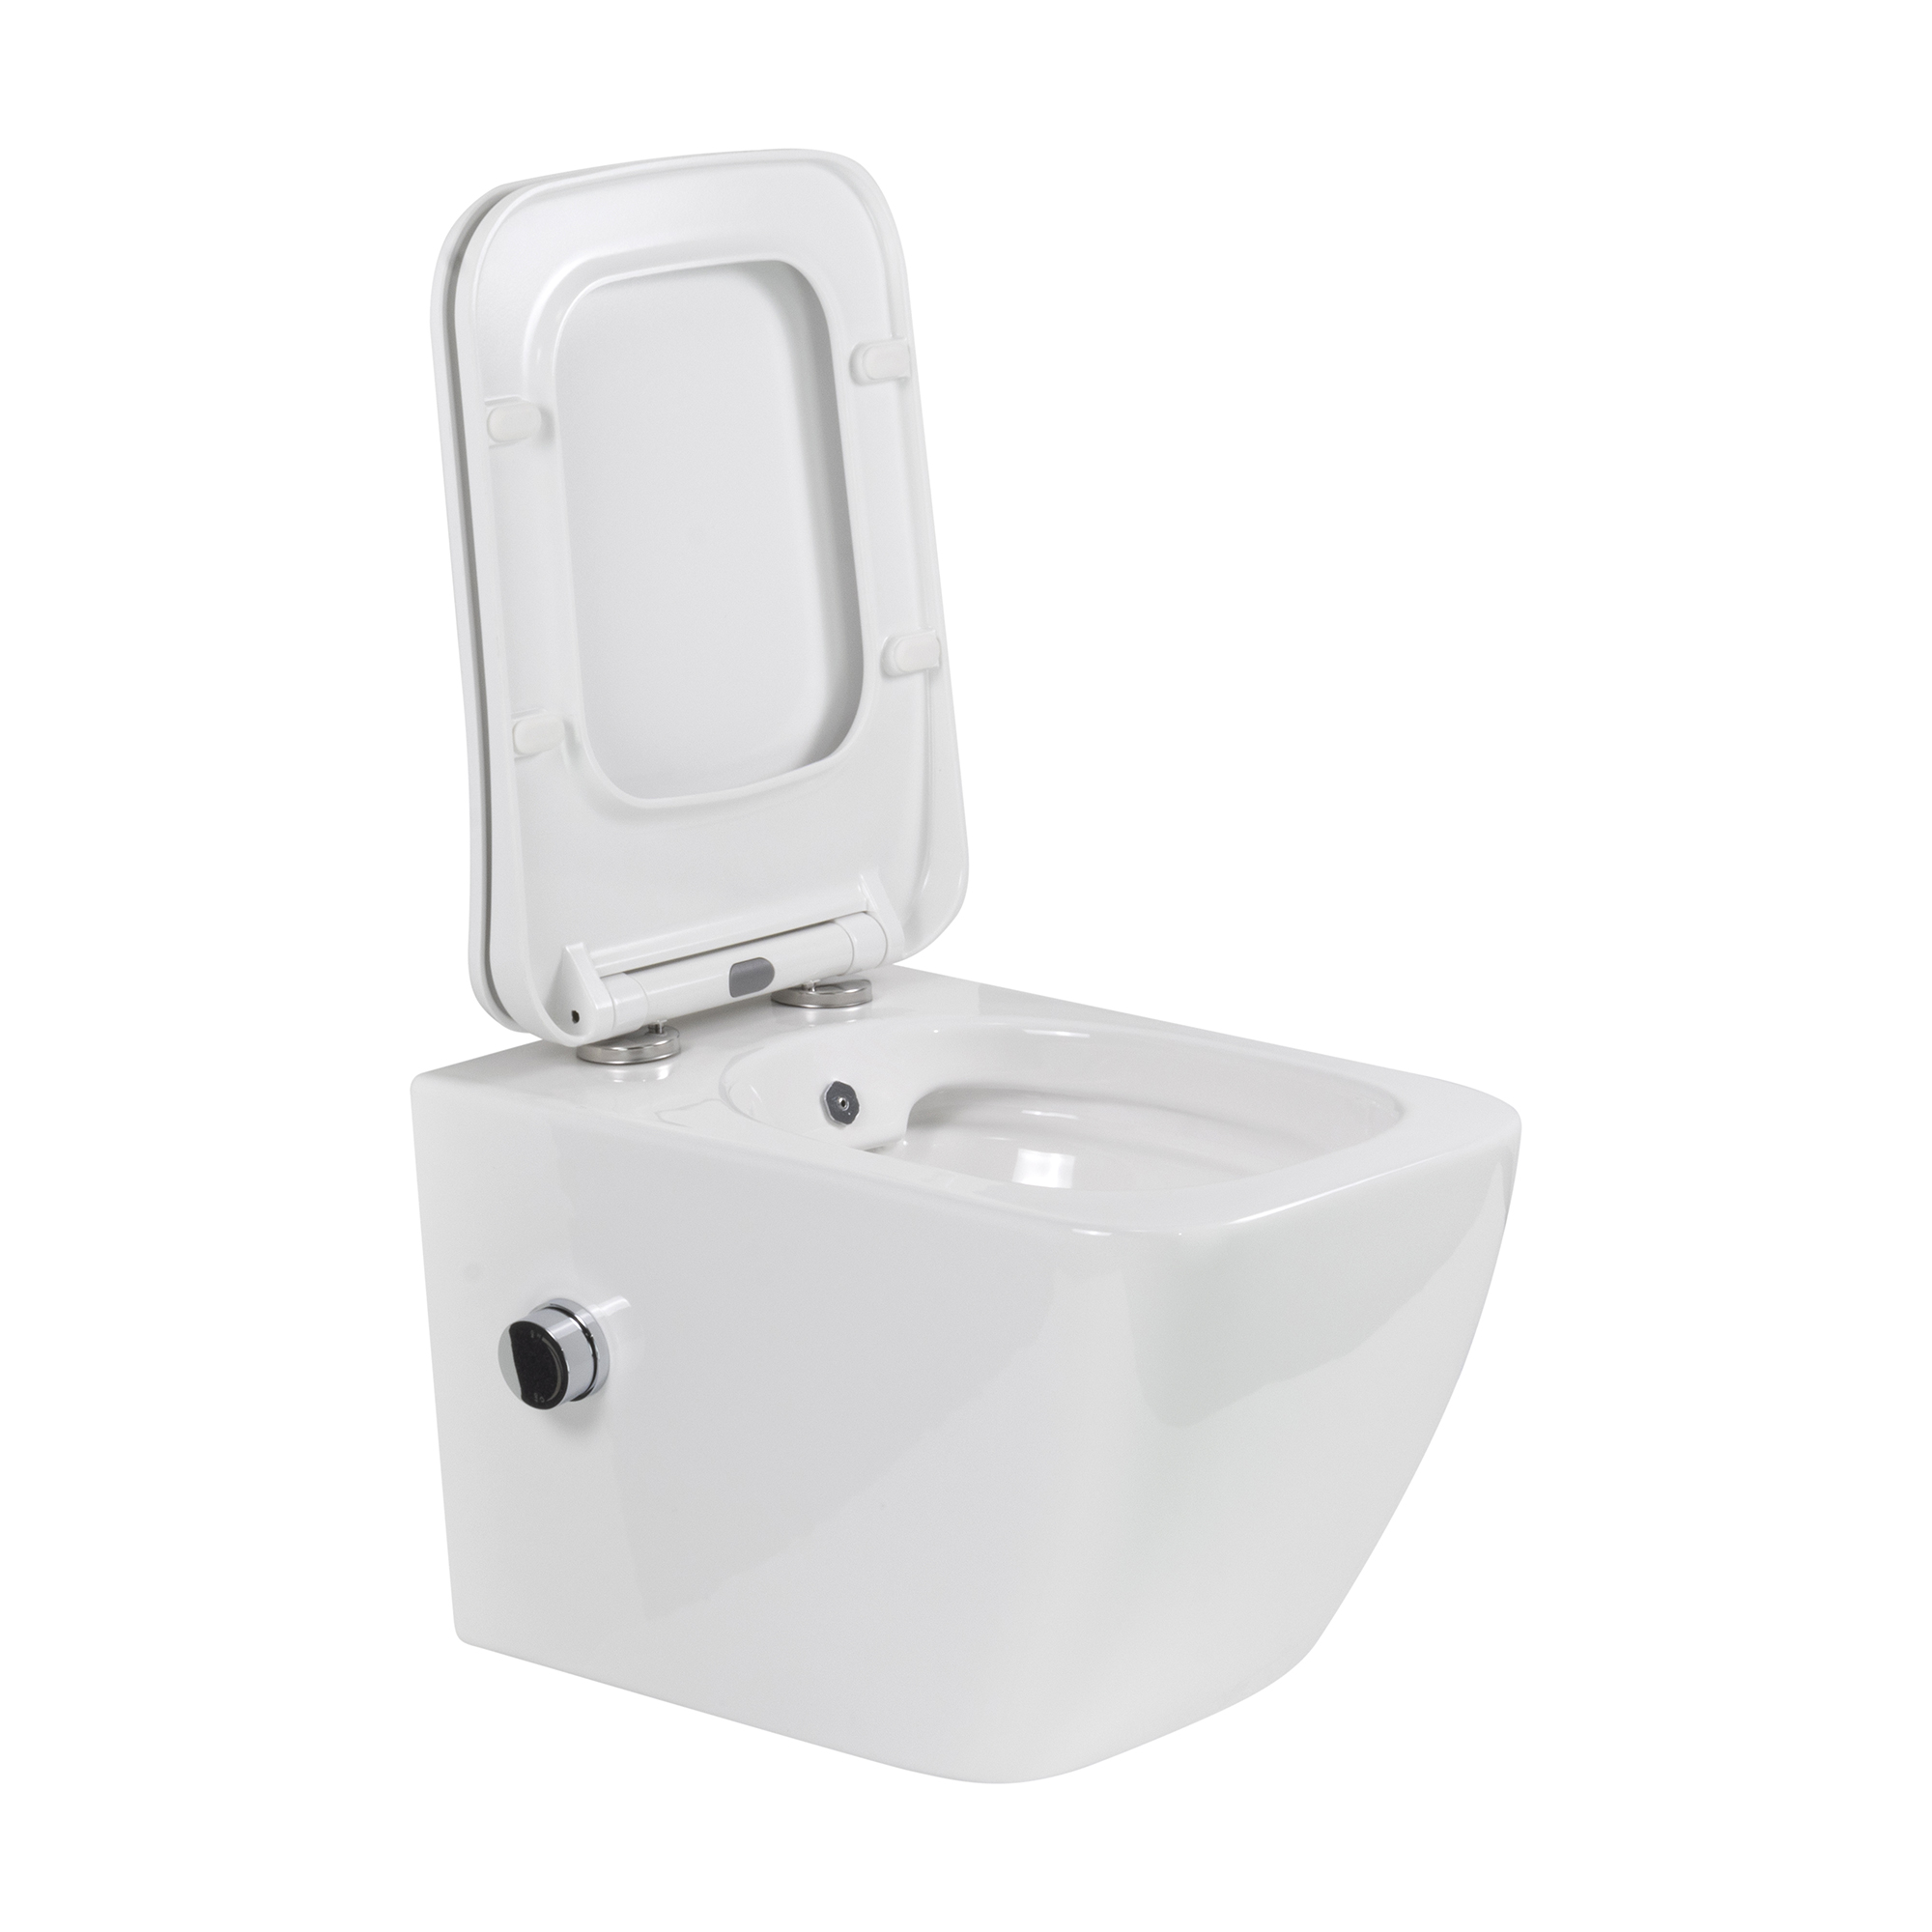 Dusch-WC Cube Fresh mit Bidetfunktion, spülrandloses Wand-WC in Weiß